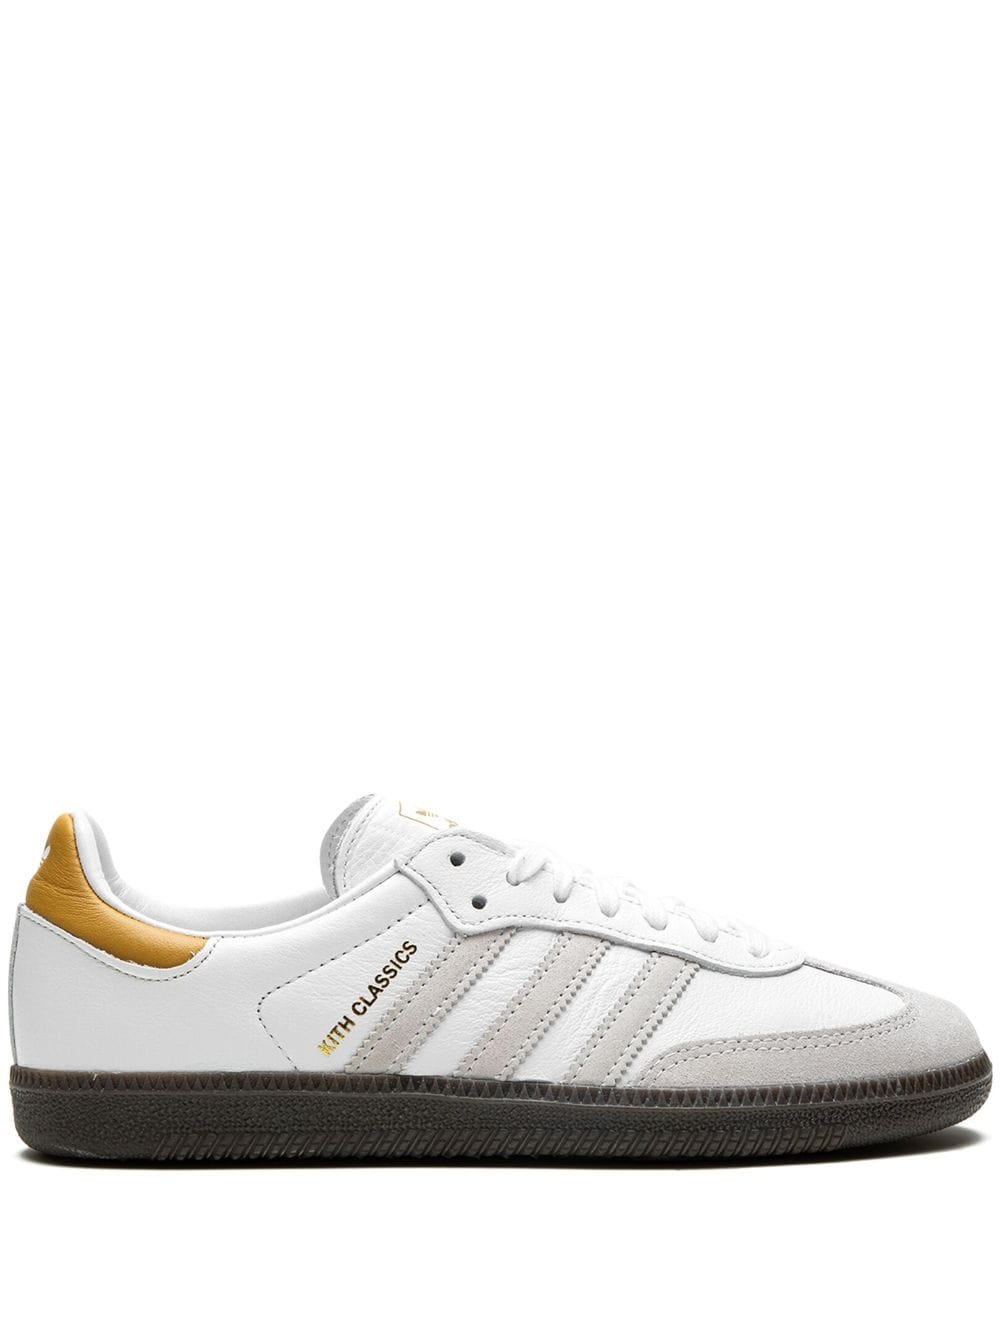 Adidas Originals Samba Kith Sneakers In White